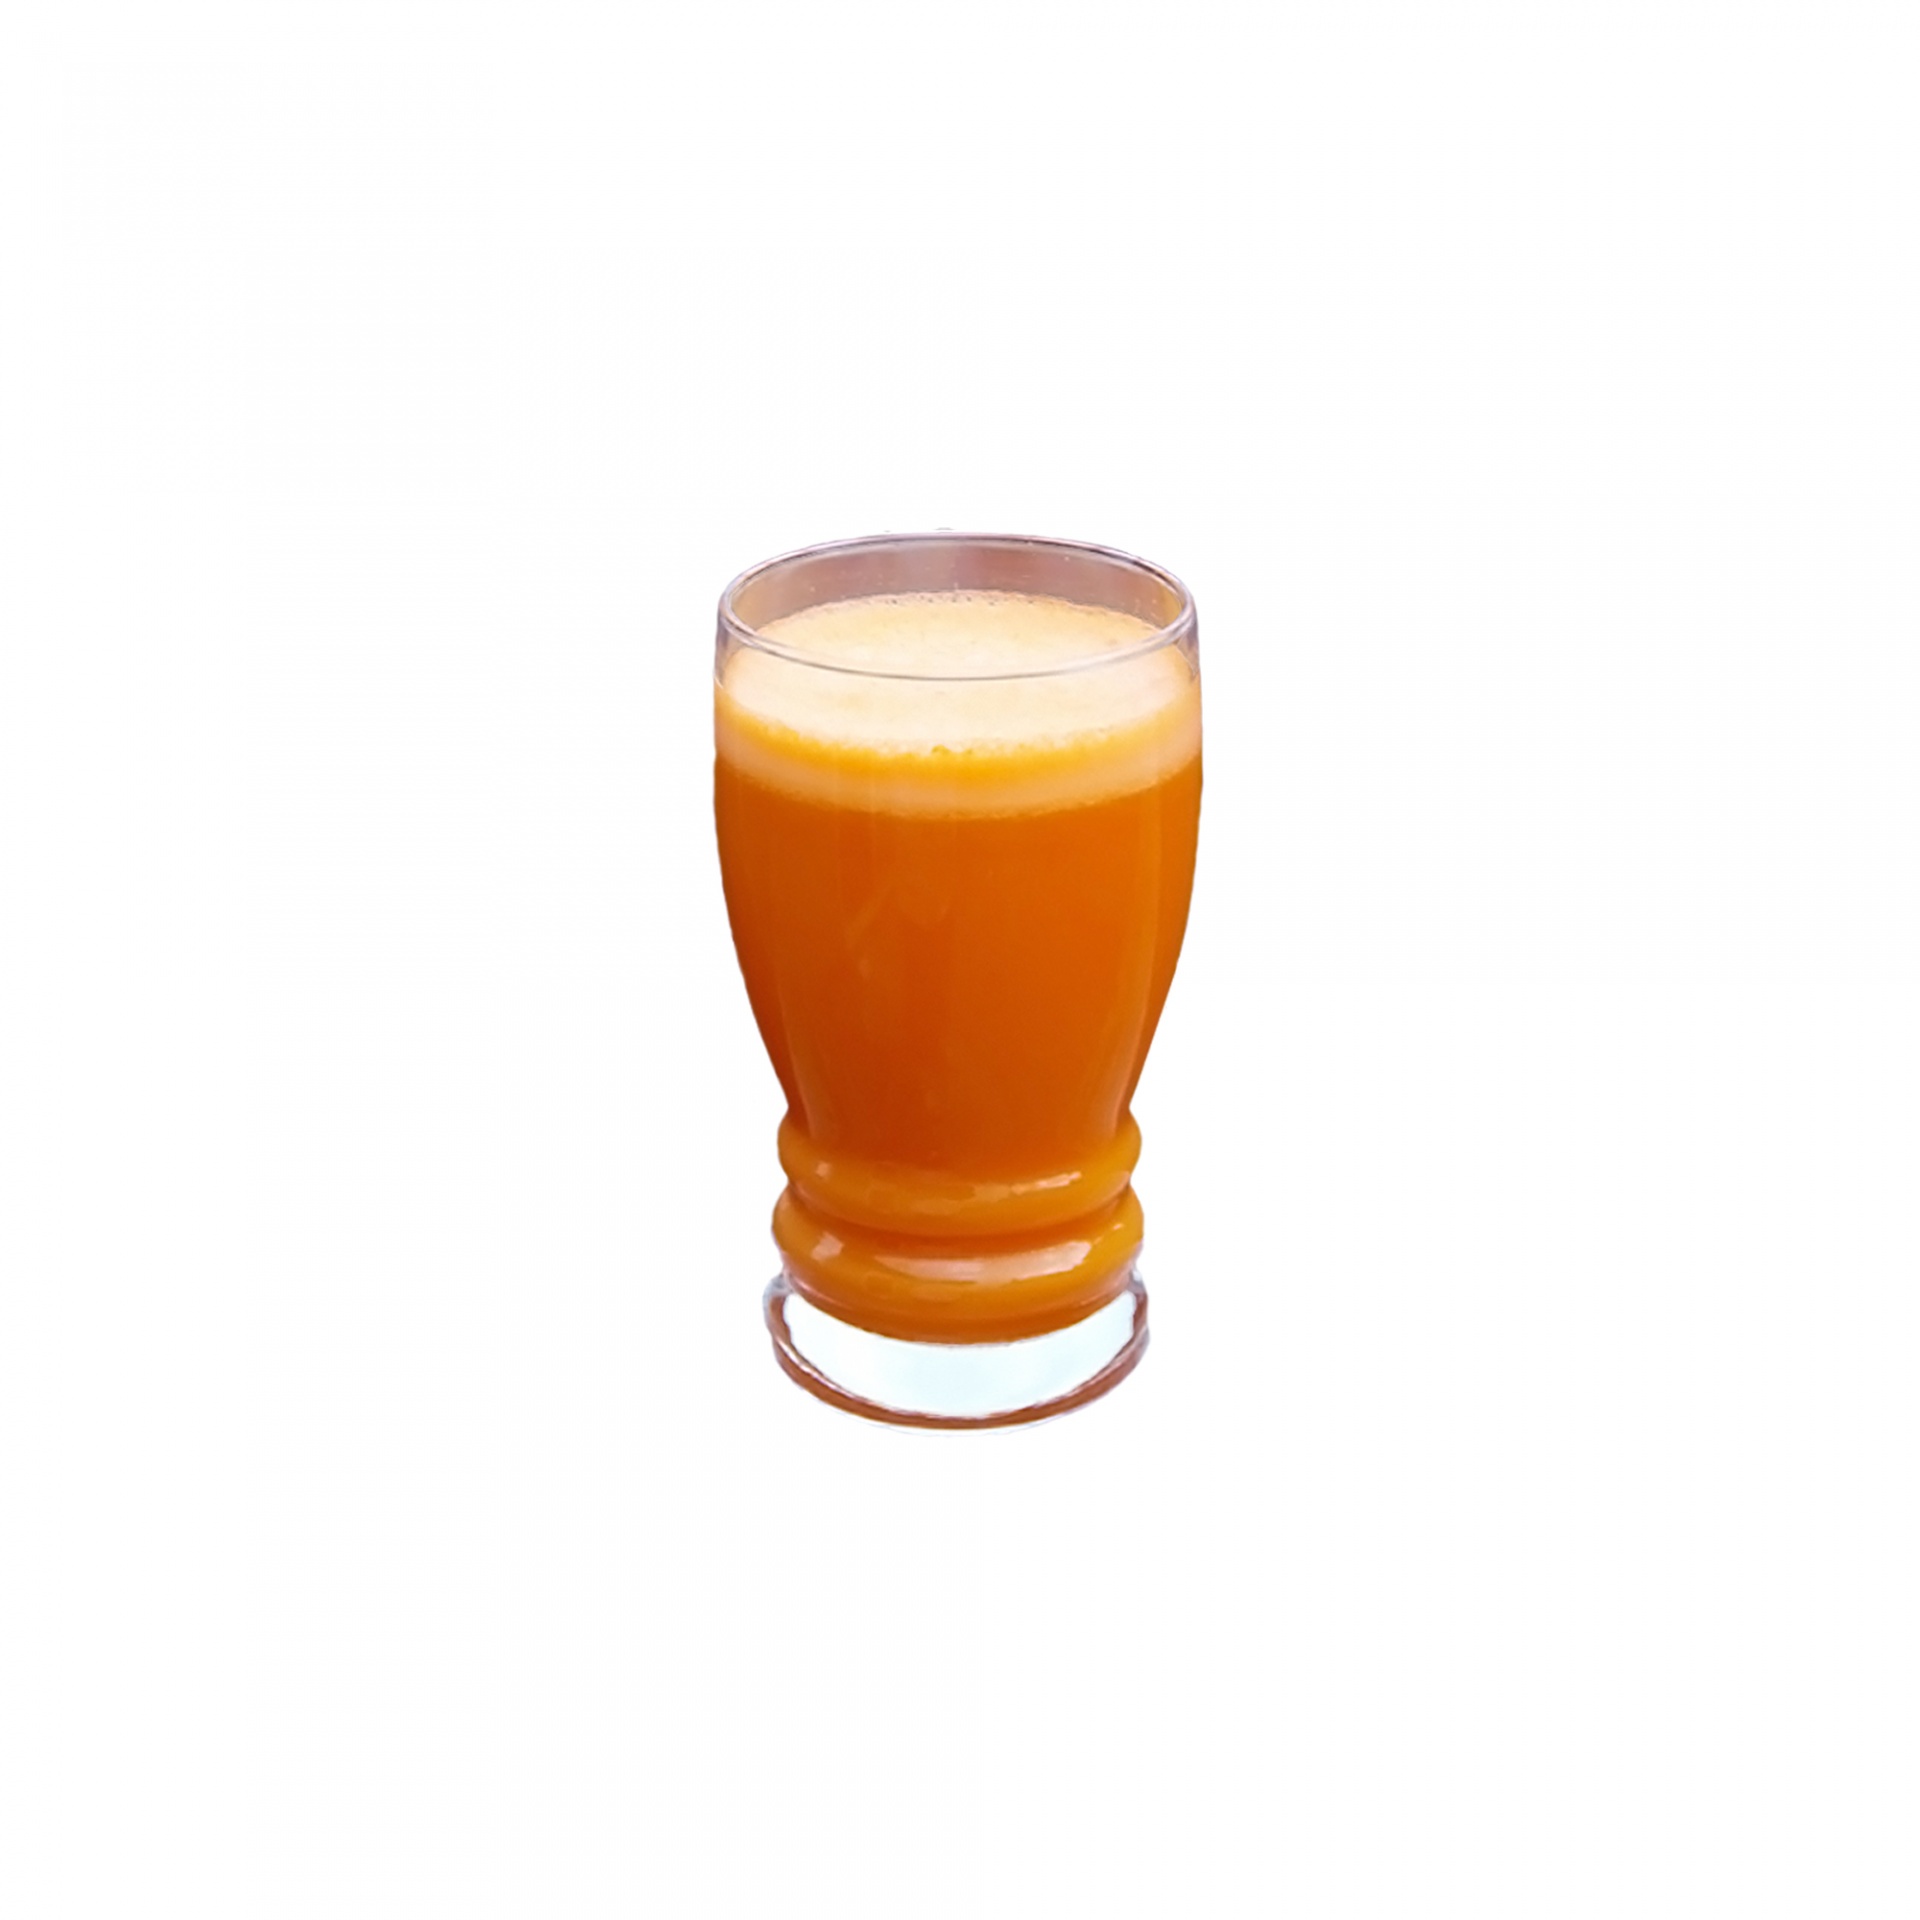 juice carrot juice glass free photo